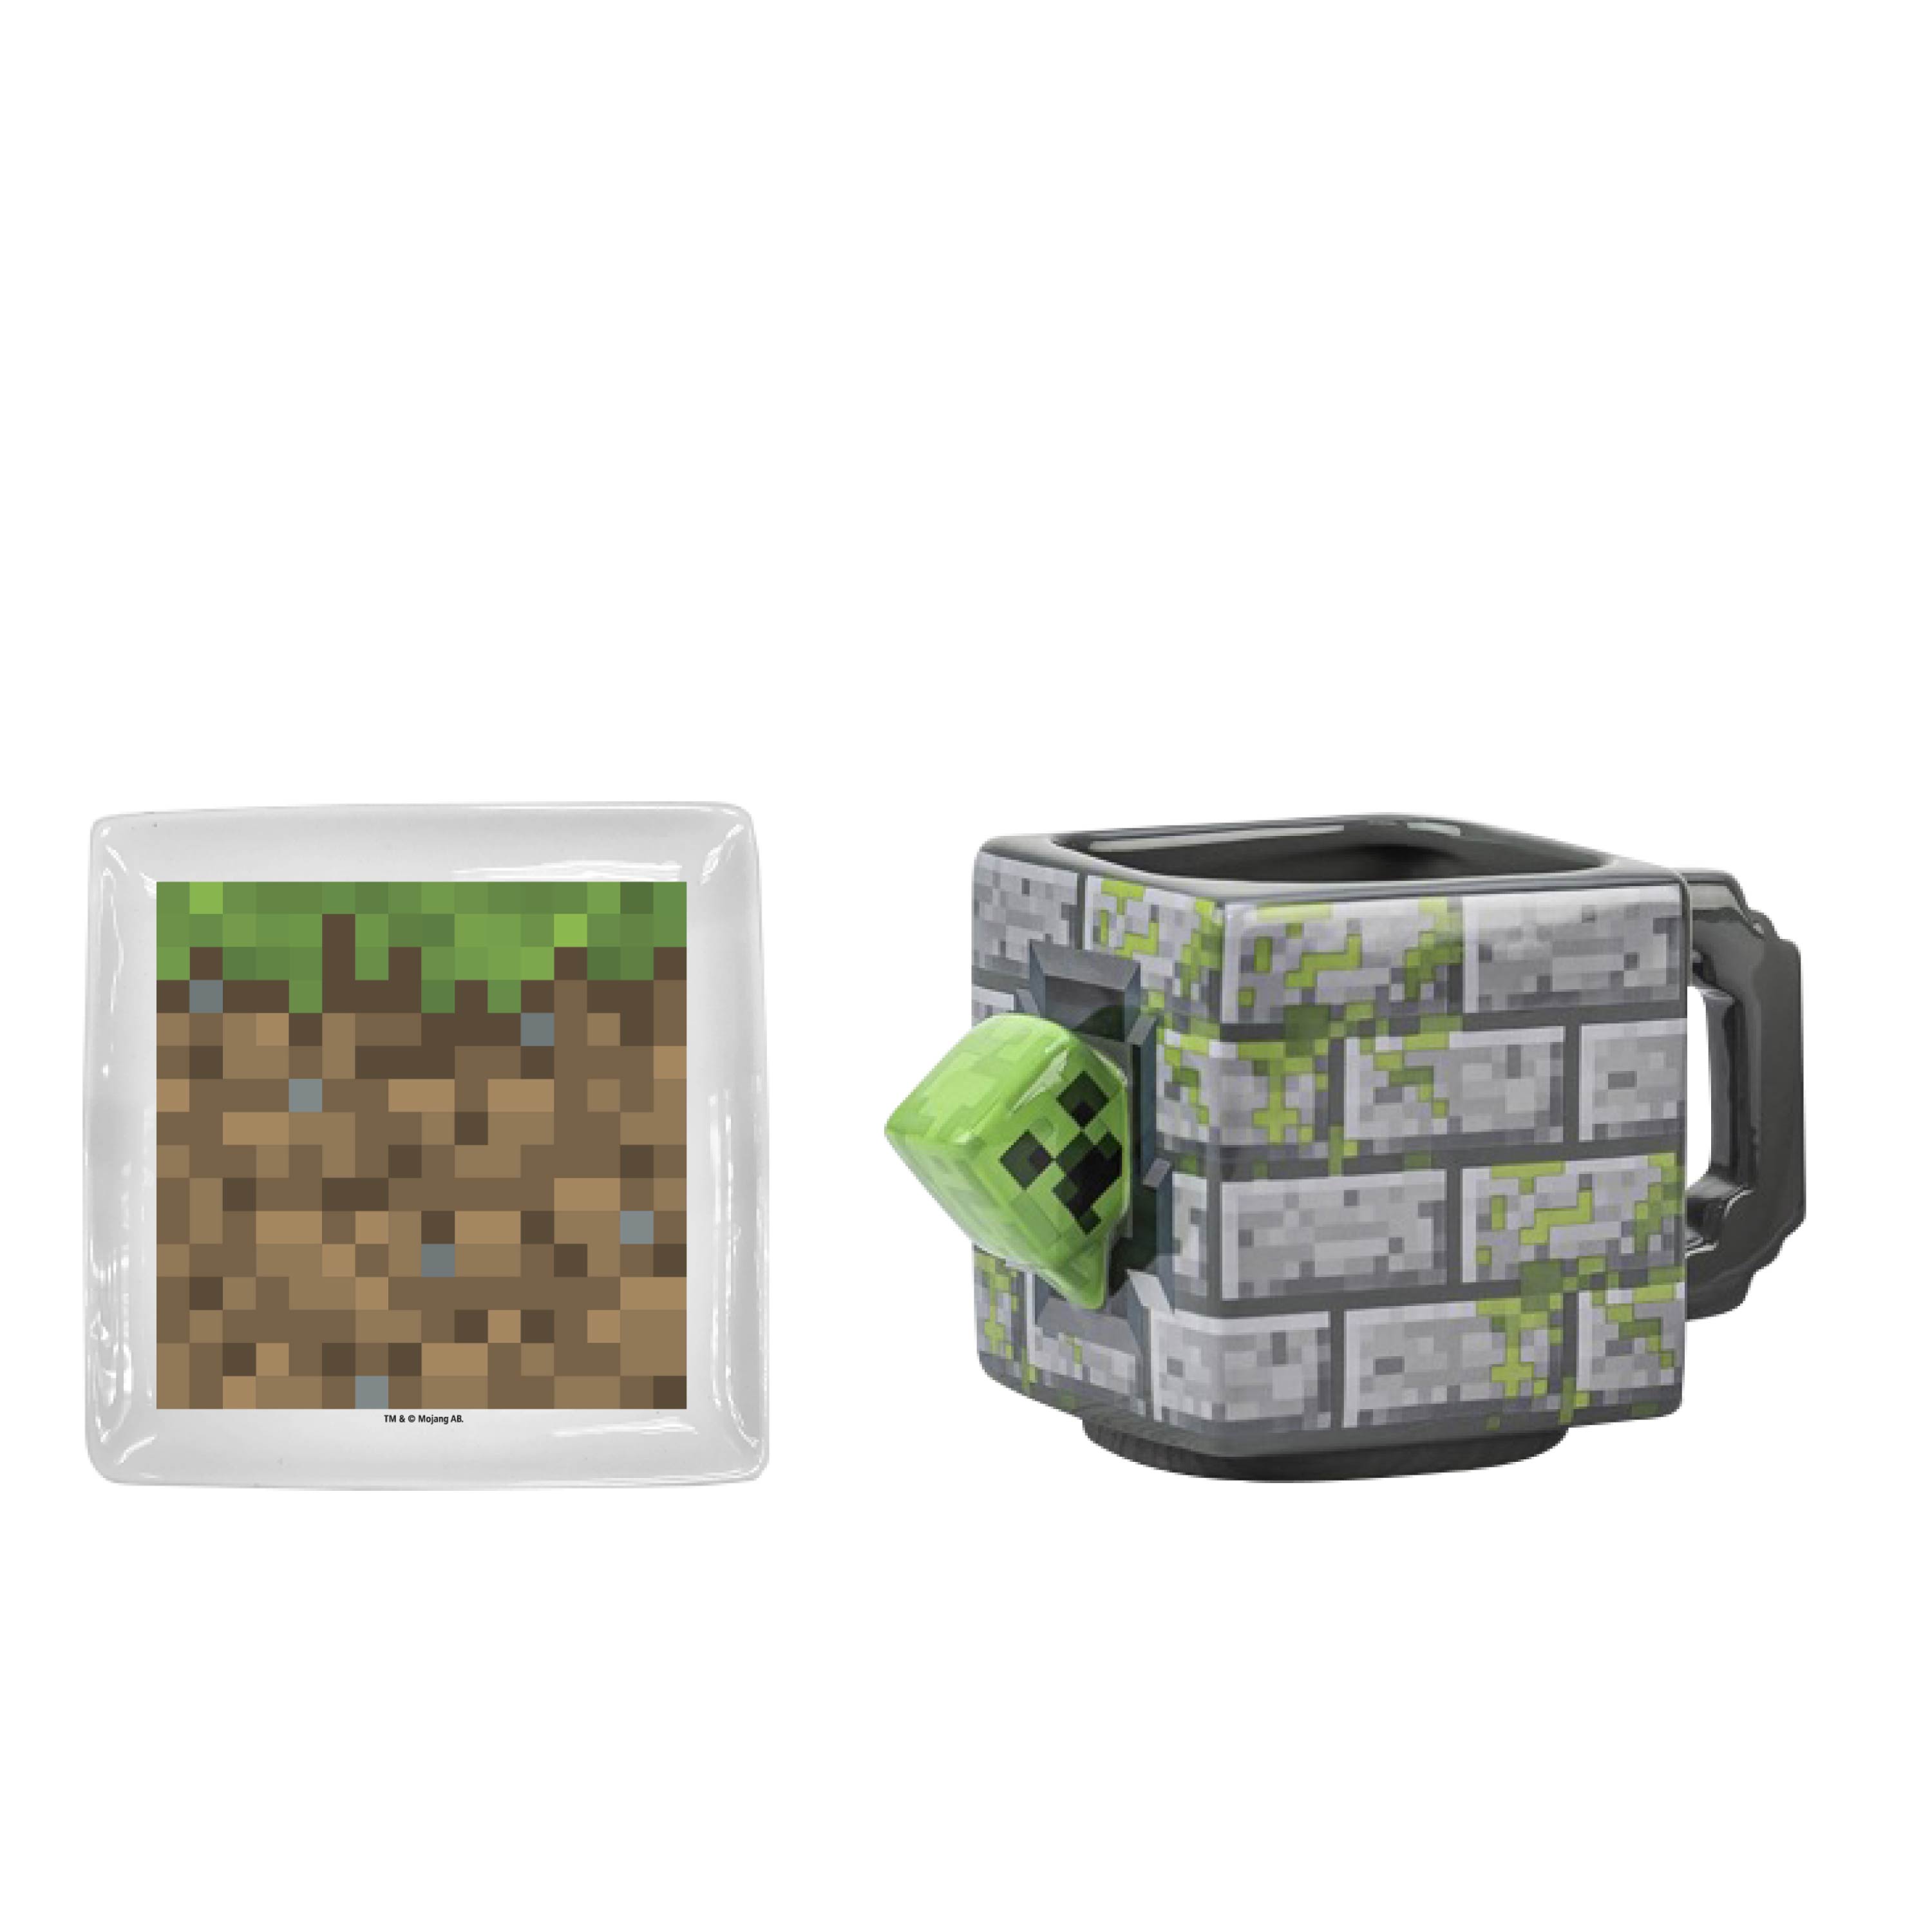 Minecraft Ceramic Plate and Mug Set, Bricks, 2-piece set slideshow image 1